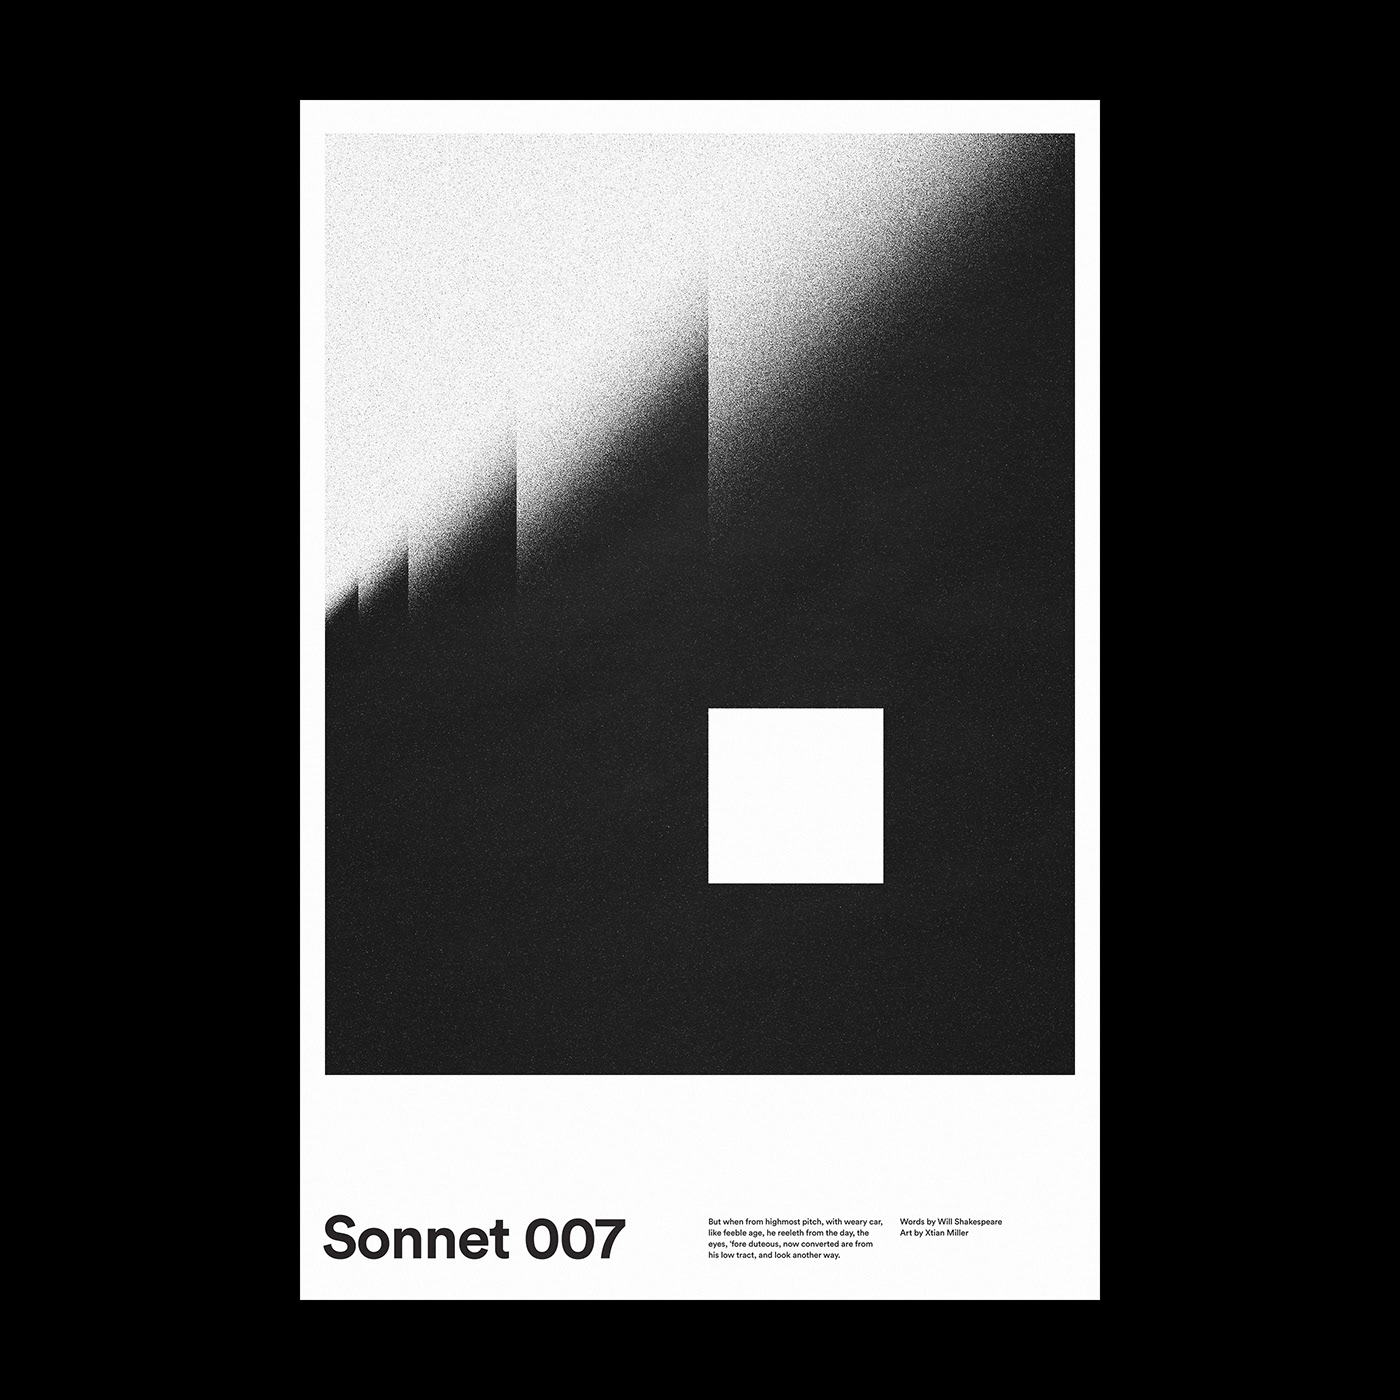 Sonnet 007 poster by Xtian Miller